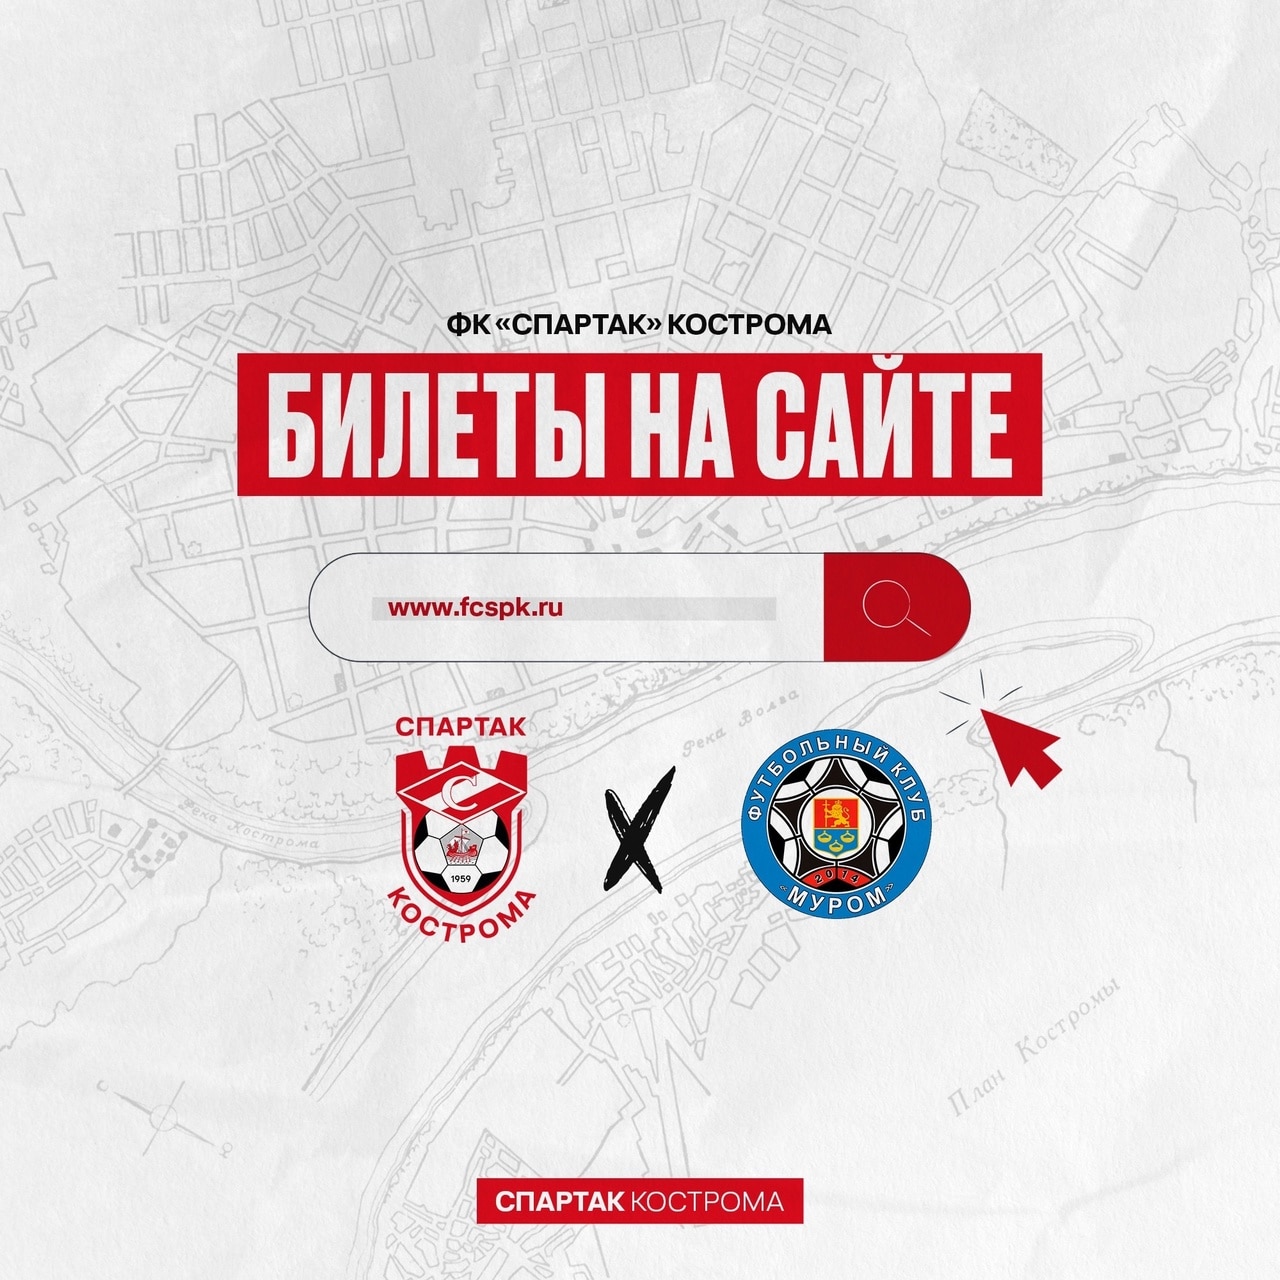 Матч «Спартака» и "Мурома" состоится на костромском стадионе